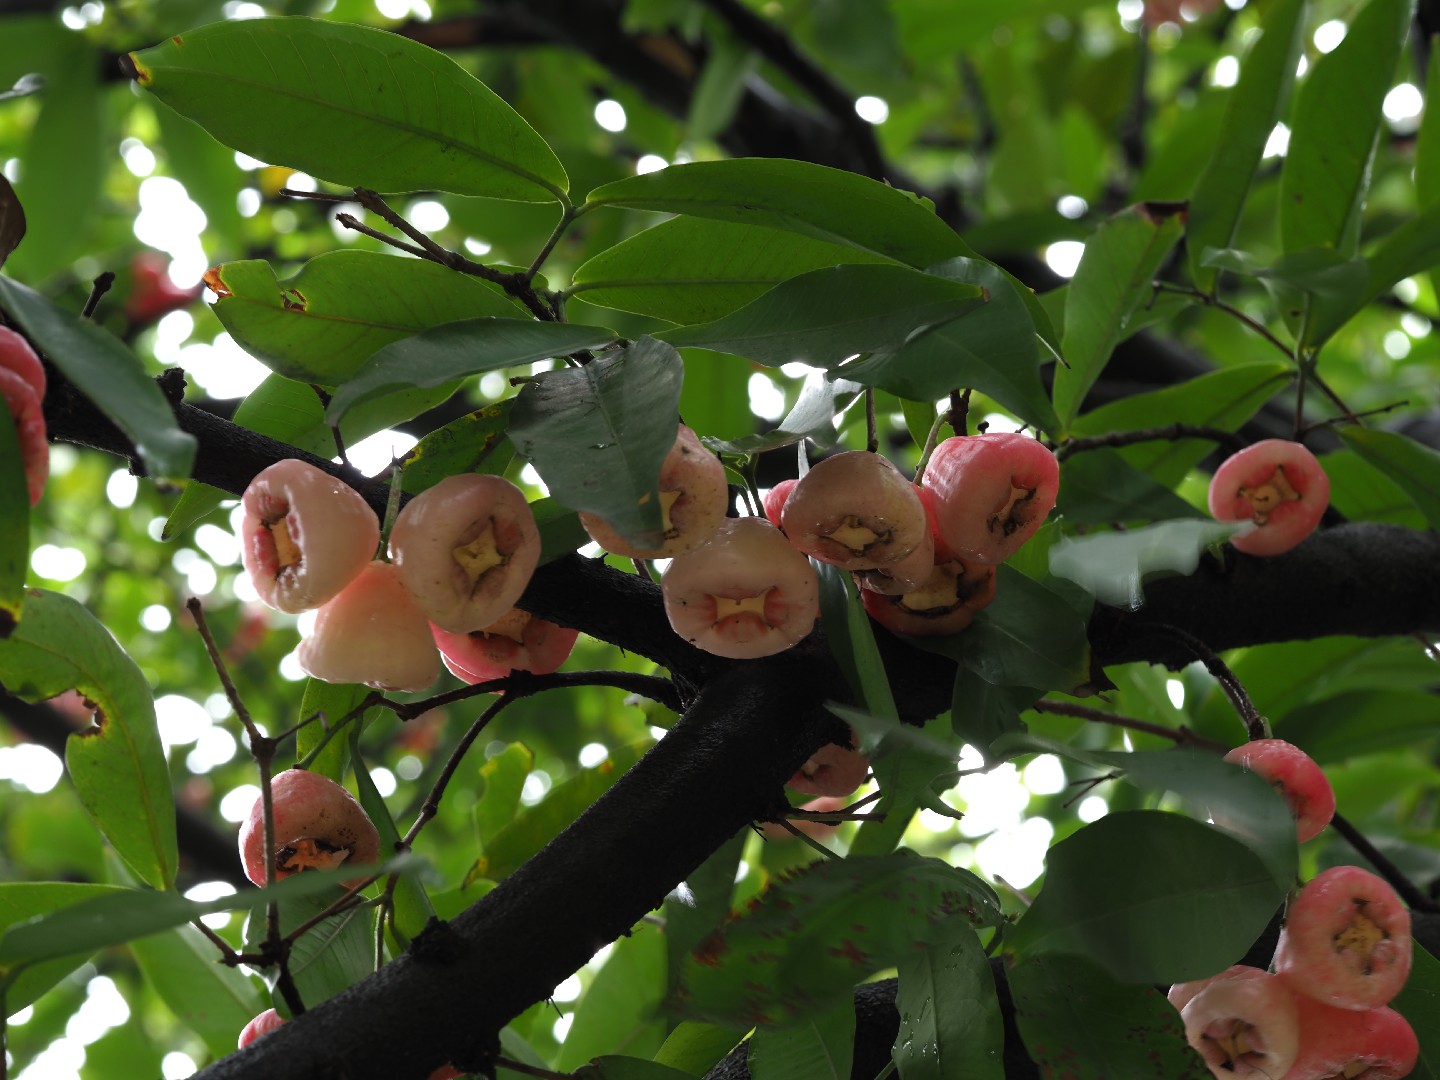 Java apple (Syzygium samarangense) Flower, Leaf, Care, Uses - PictureThis